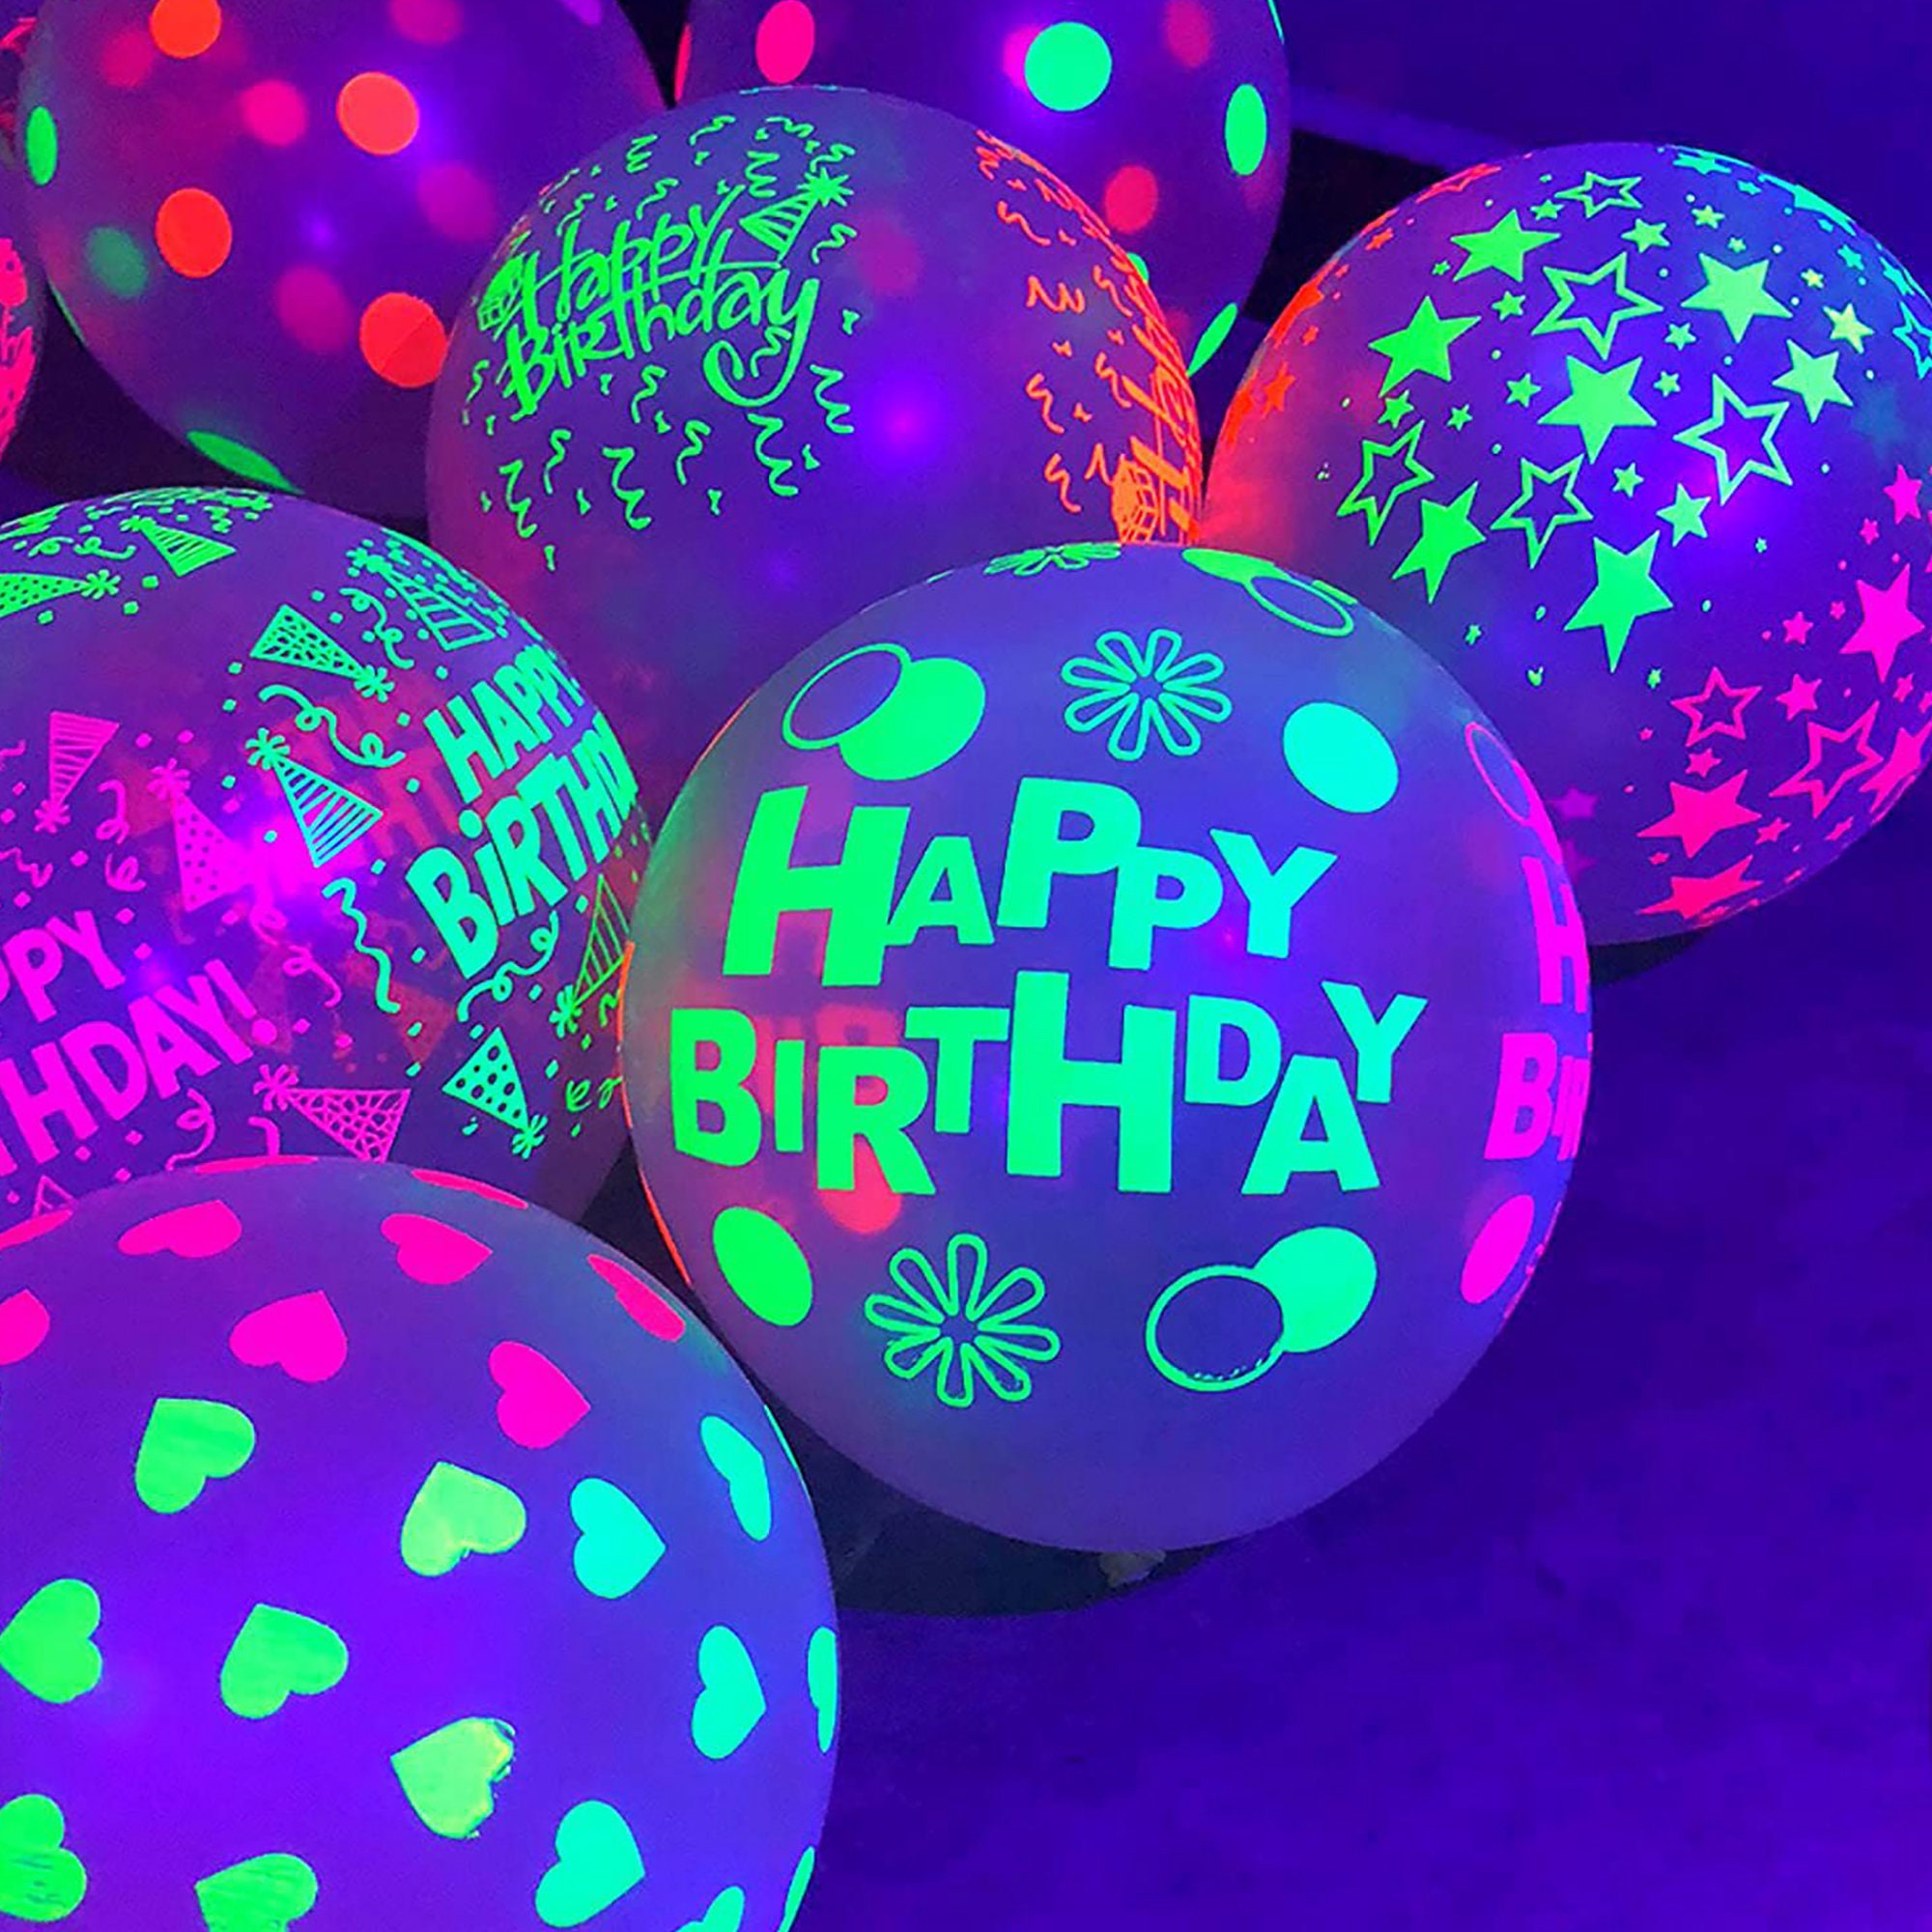 Star Print Radium Balloon 10Pcs Glow in the Dark Baloons Disco